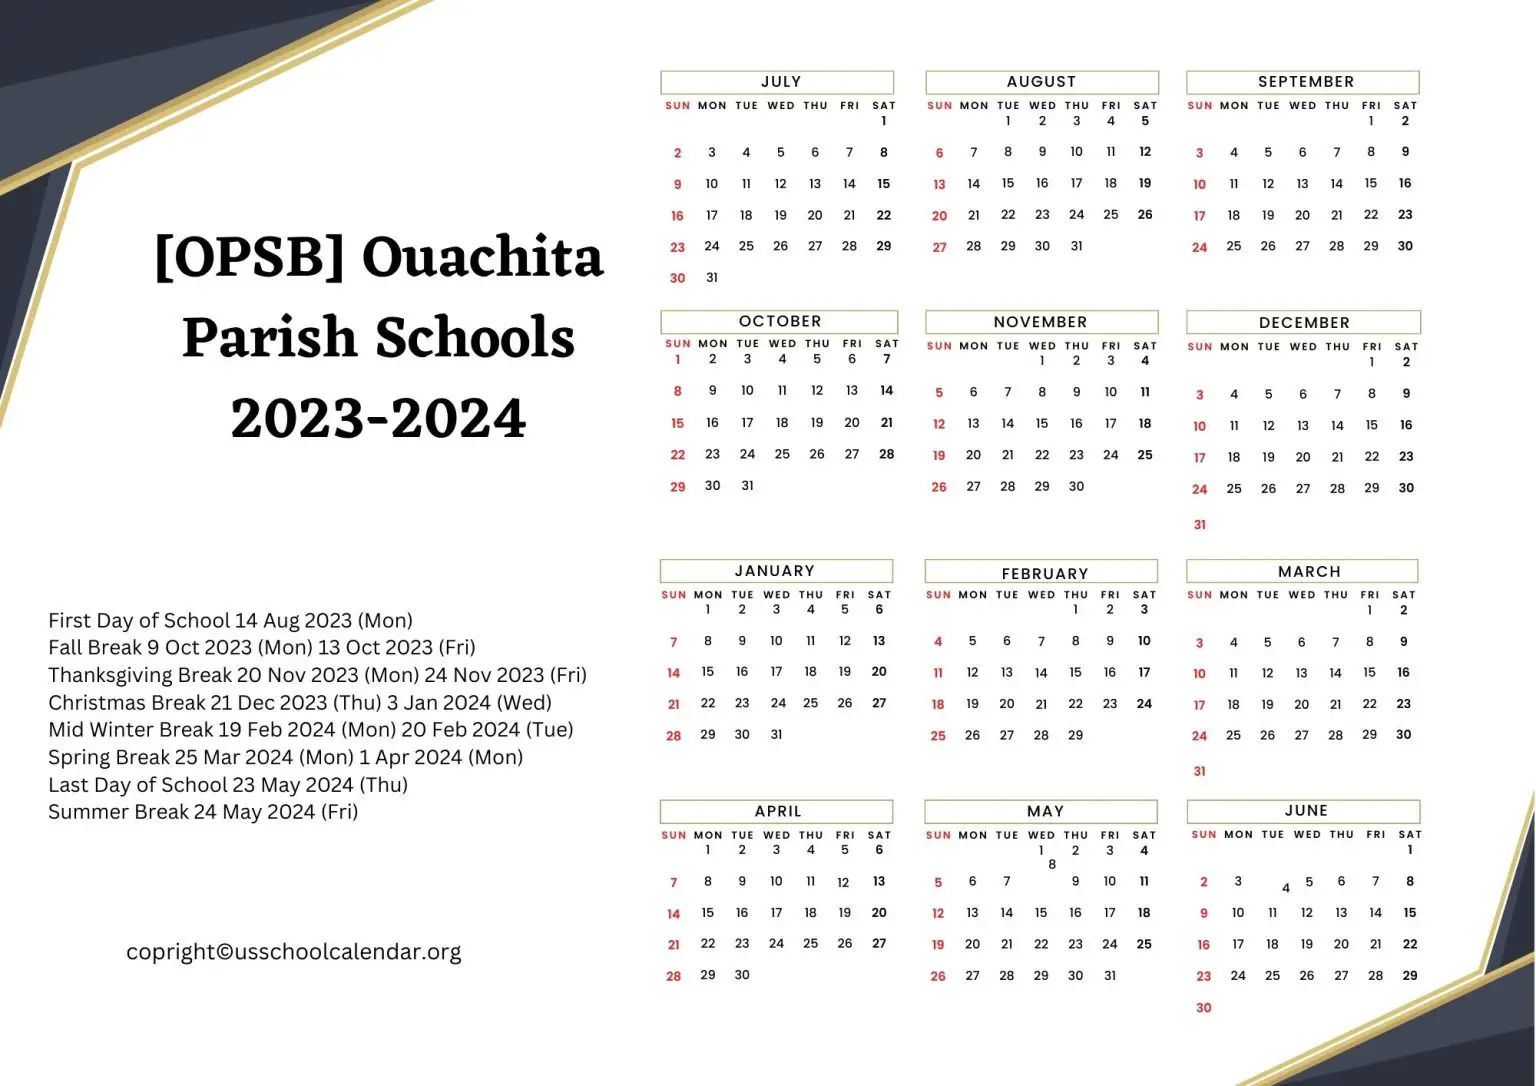 opsb-ouachita-parish-schools-calendar-holidays-2023-2024